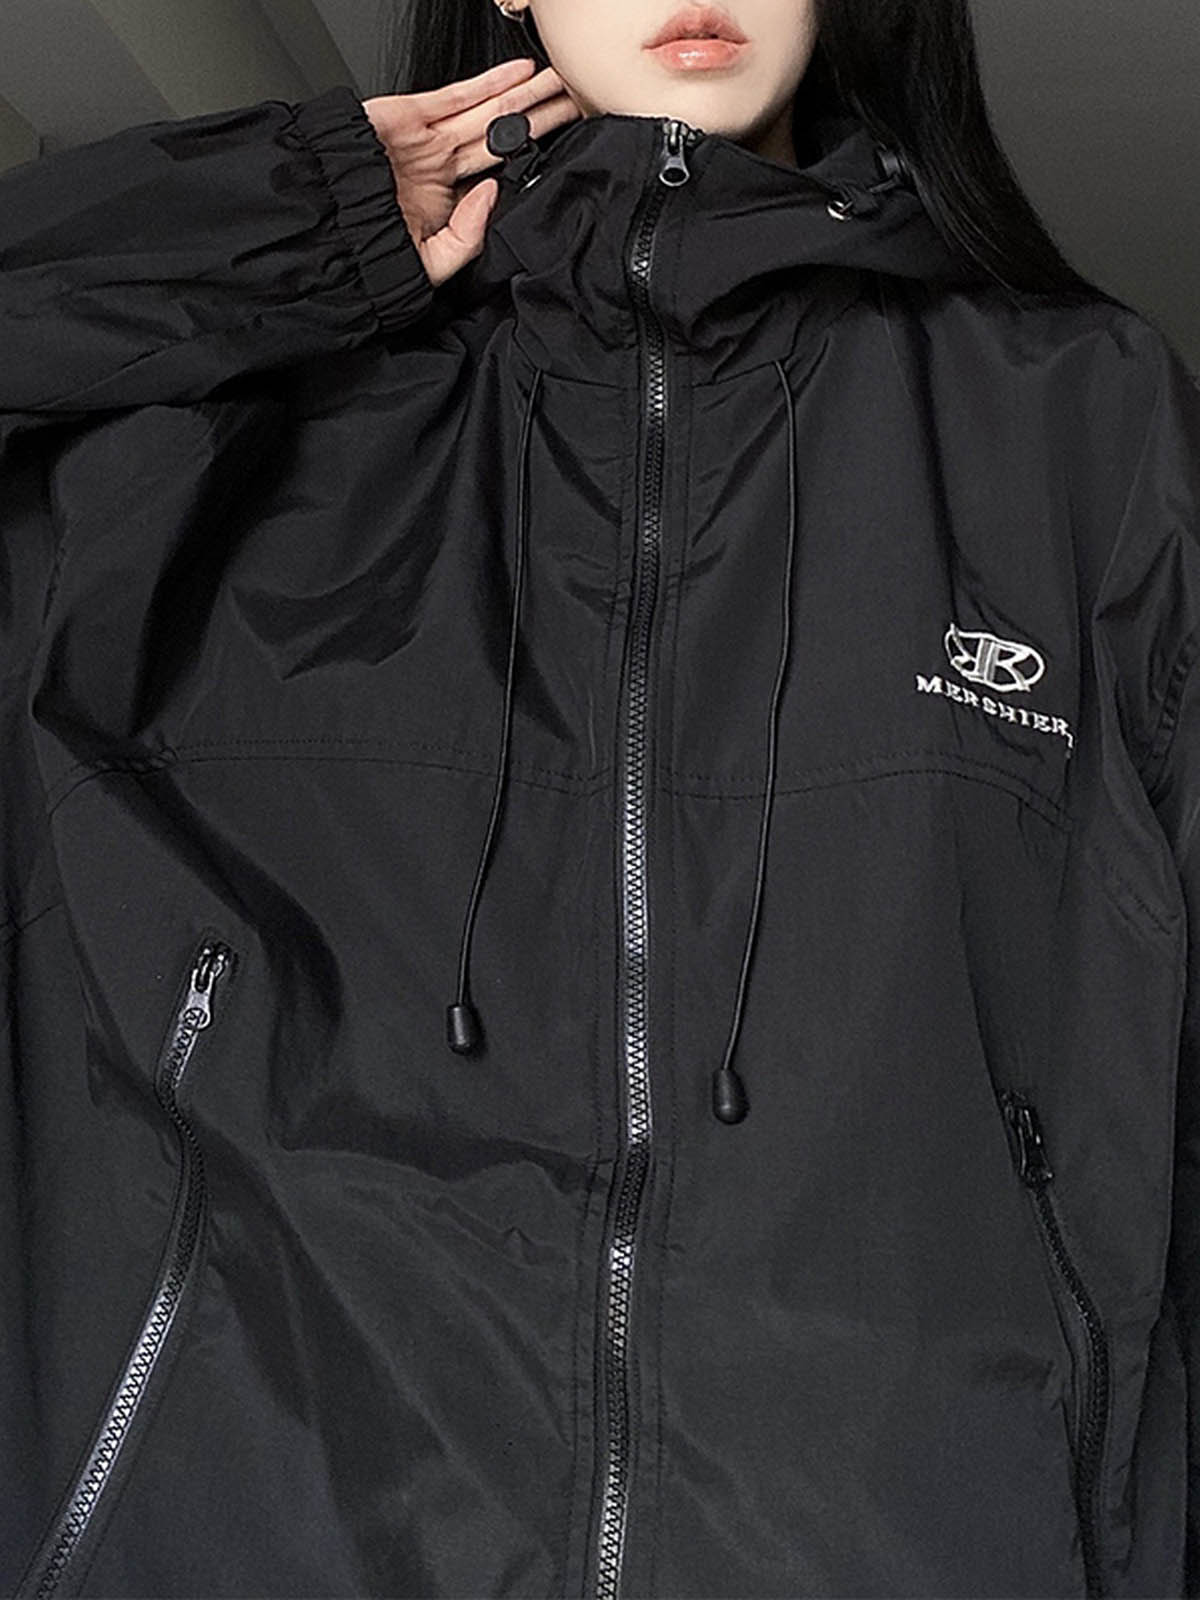 Retro Schwarze Wasserfeste Oversize Outdoor Jacke mit Kapuze